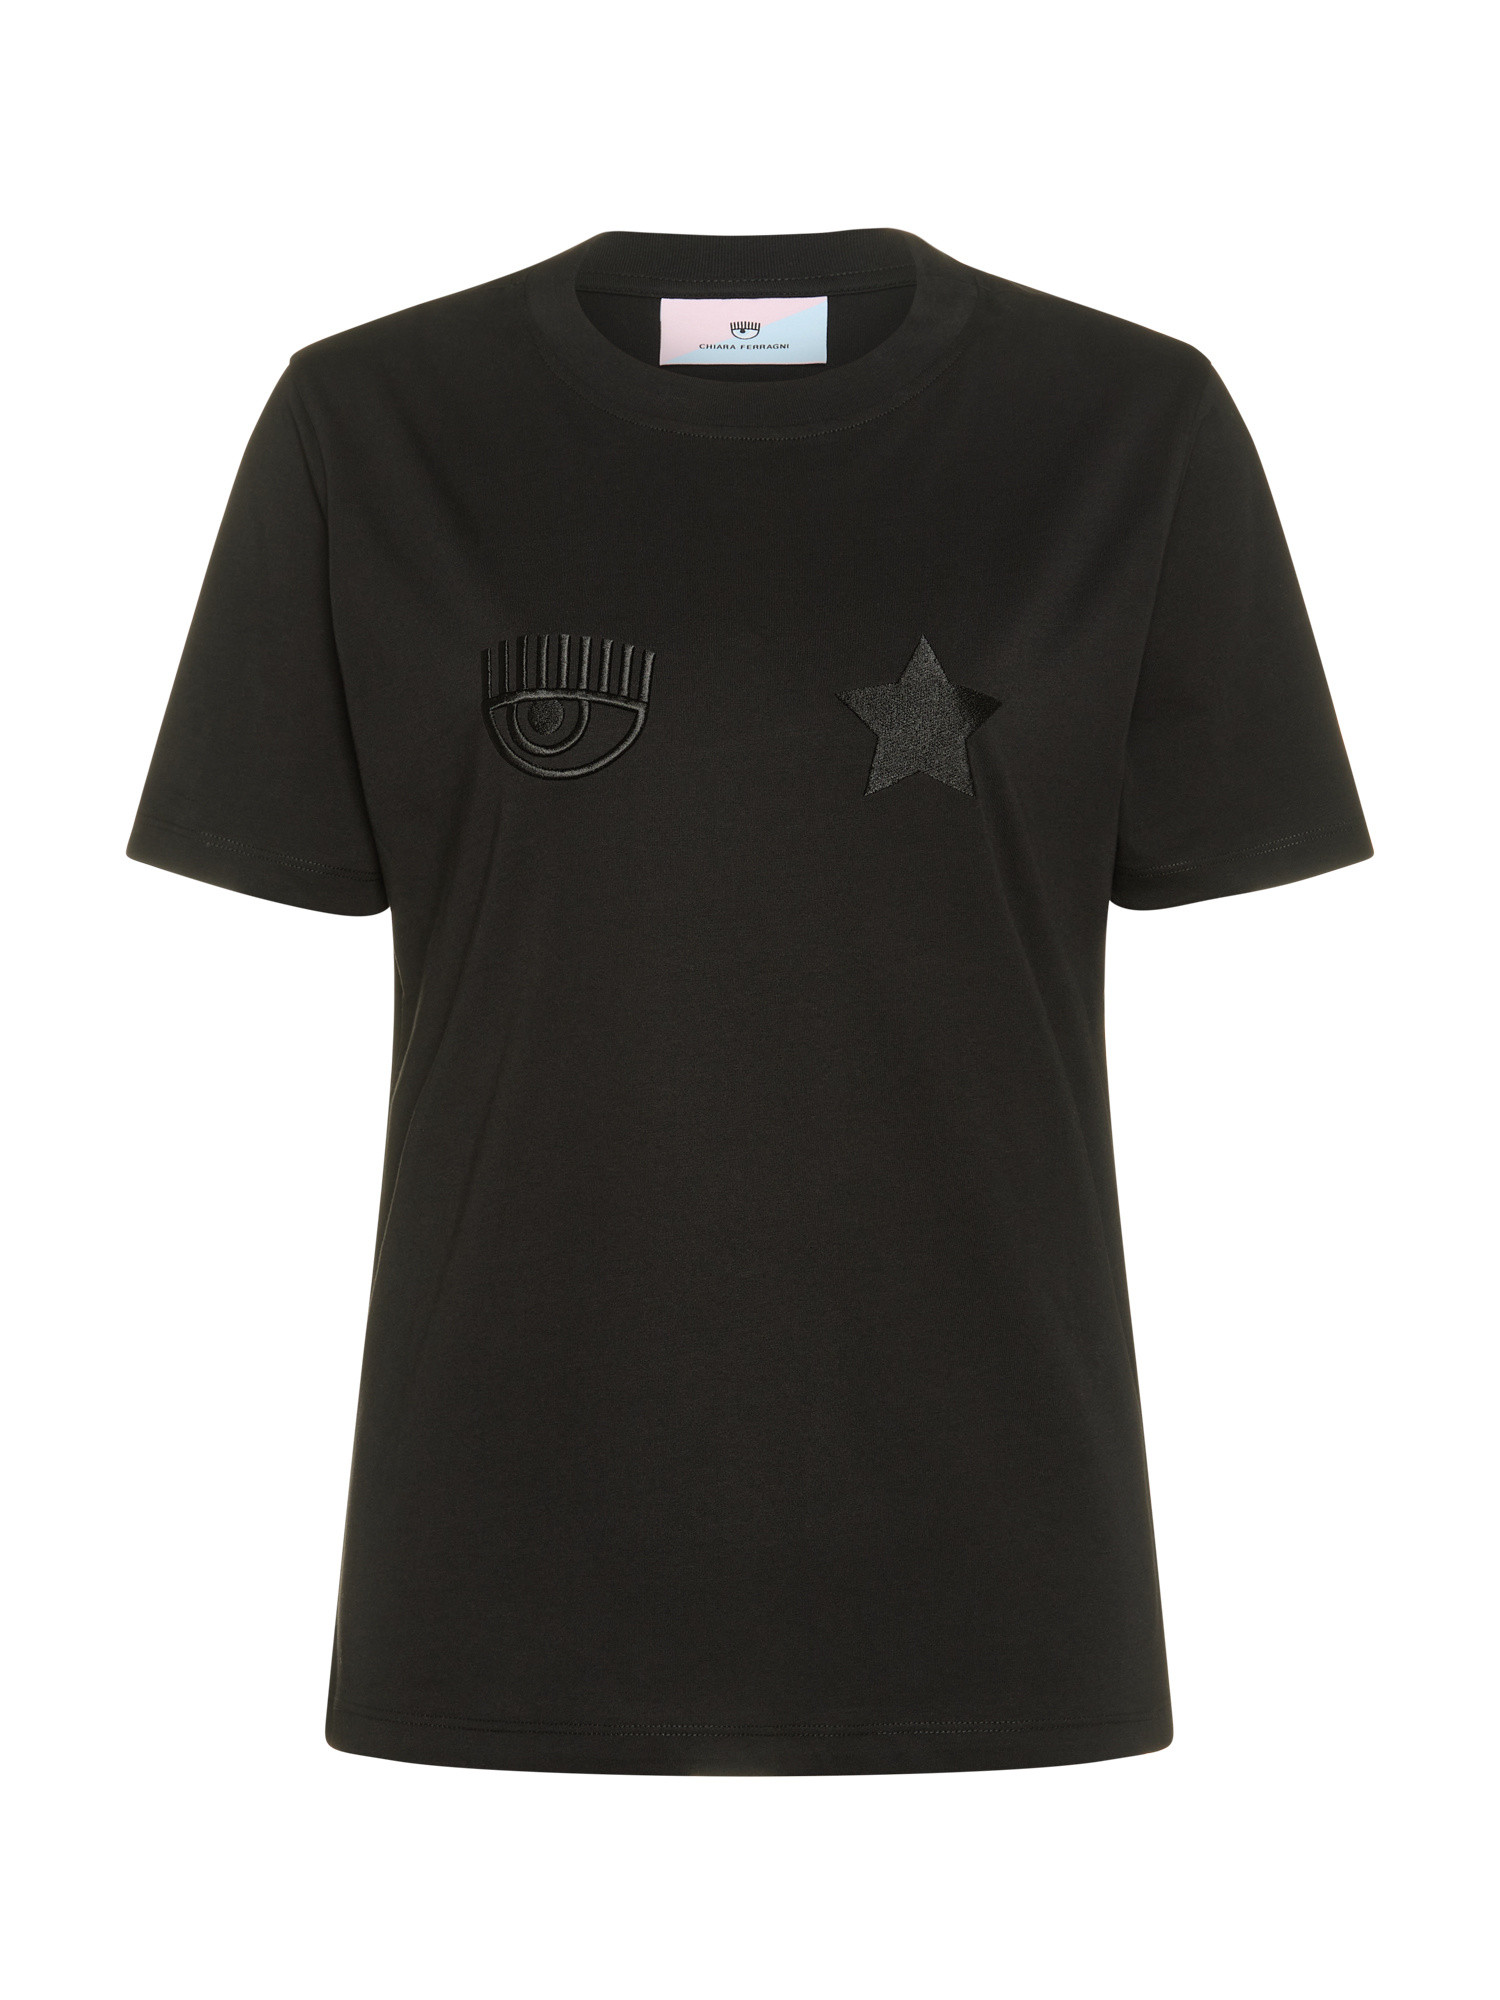 Chiara Ferragni - Embroidered logo T-shirt, Black, large image number 0